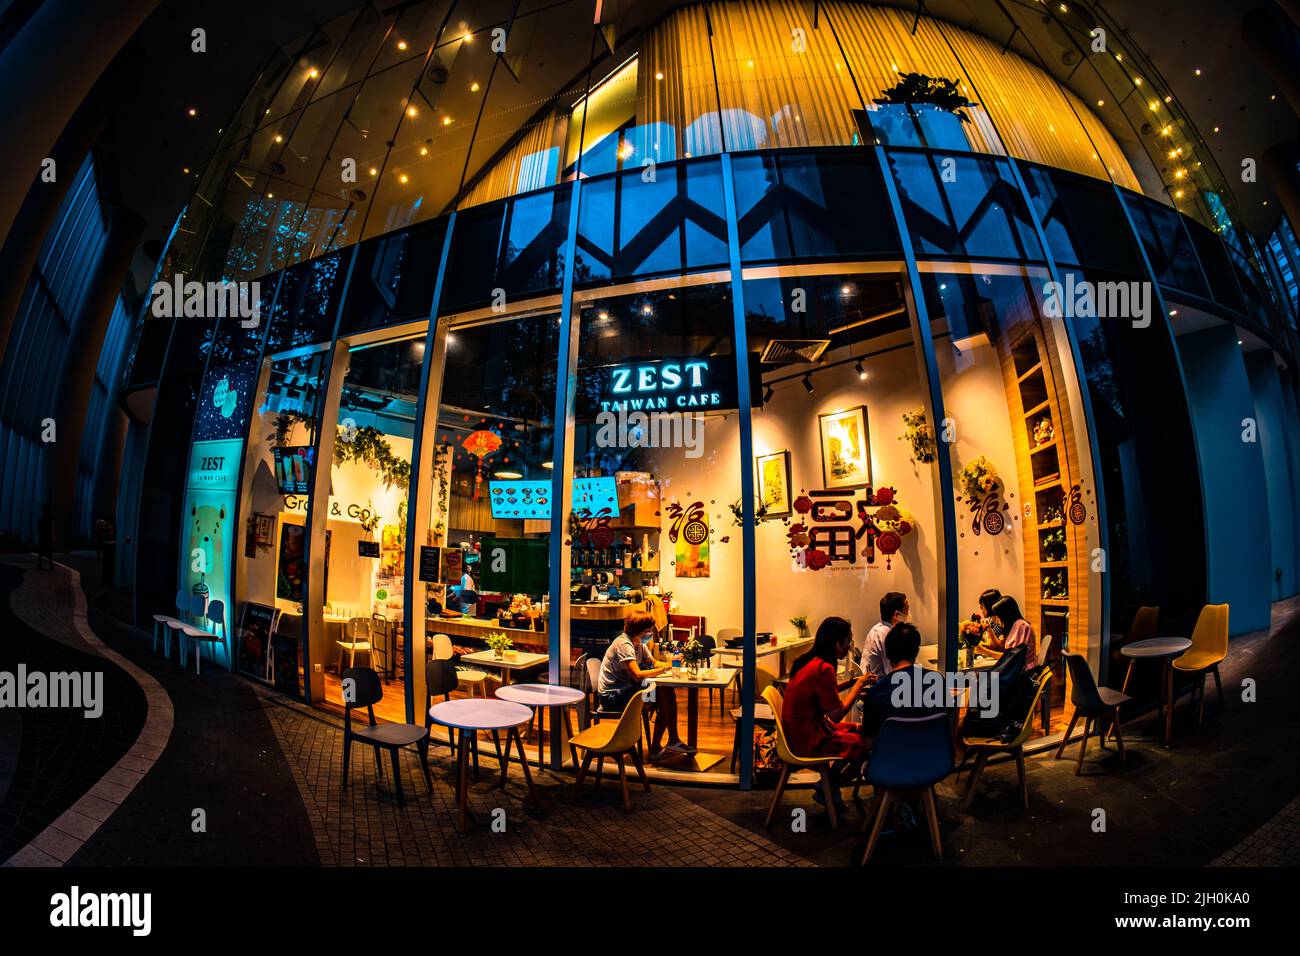 Zest Taiwan Cafe presso le residenze Duo. Foto Stock